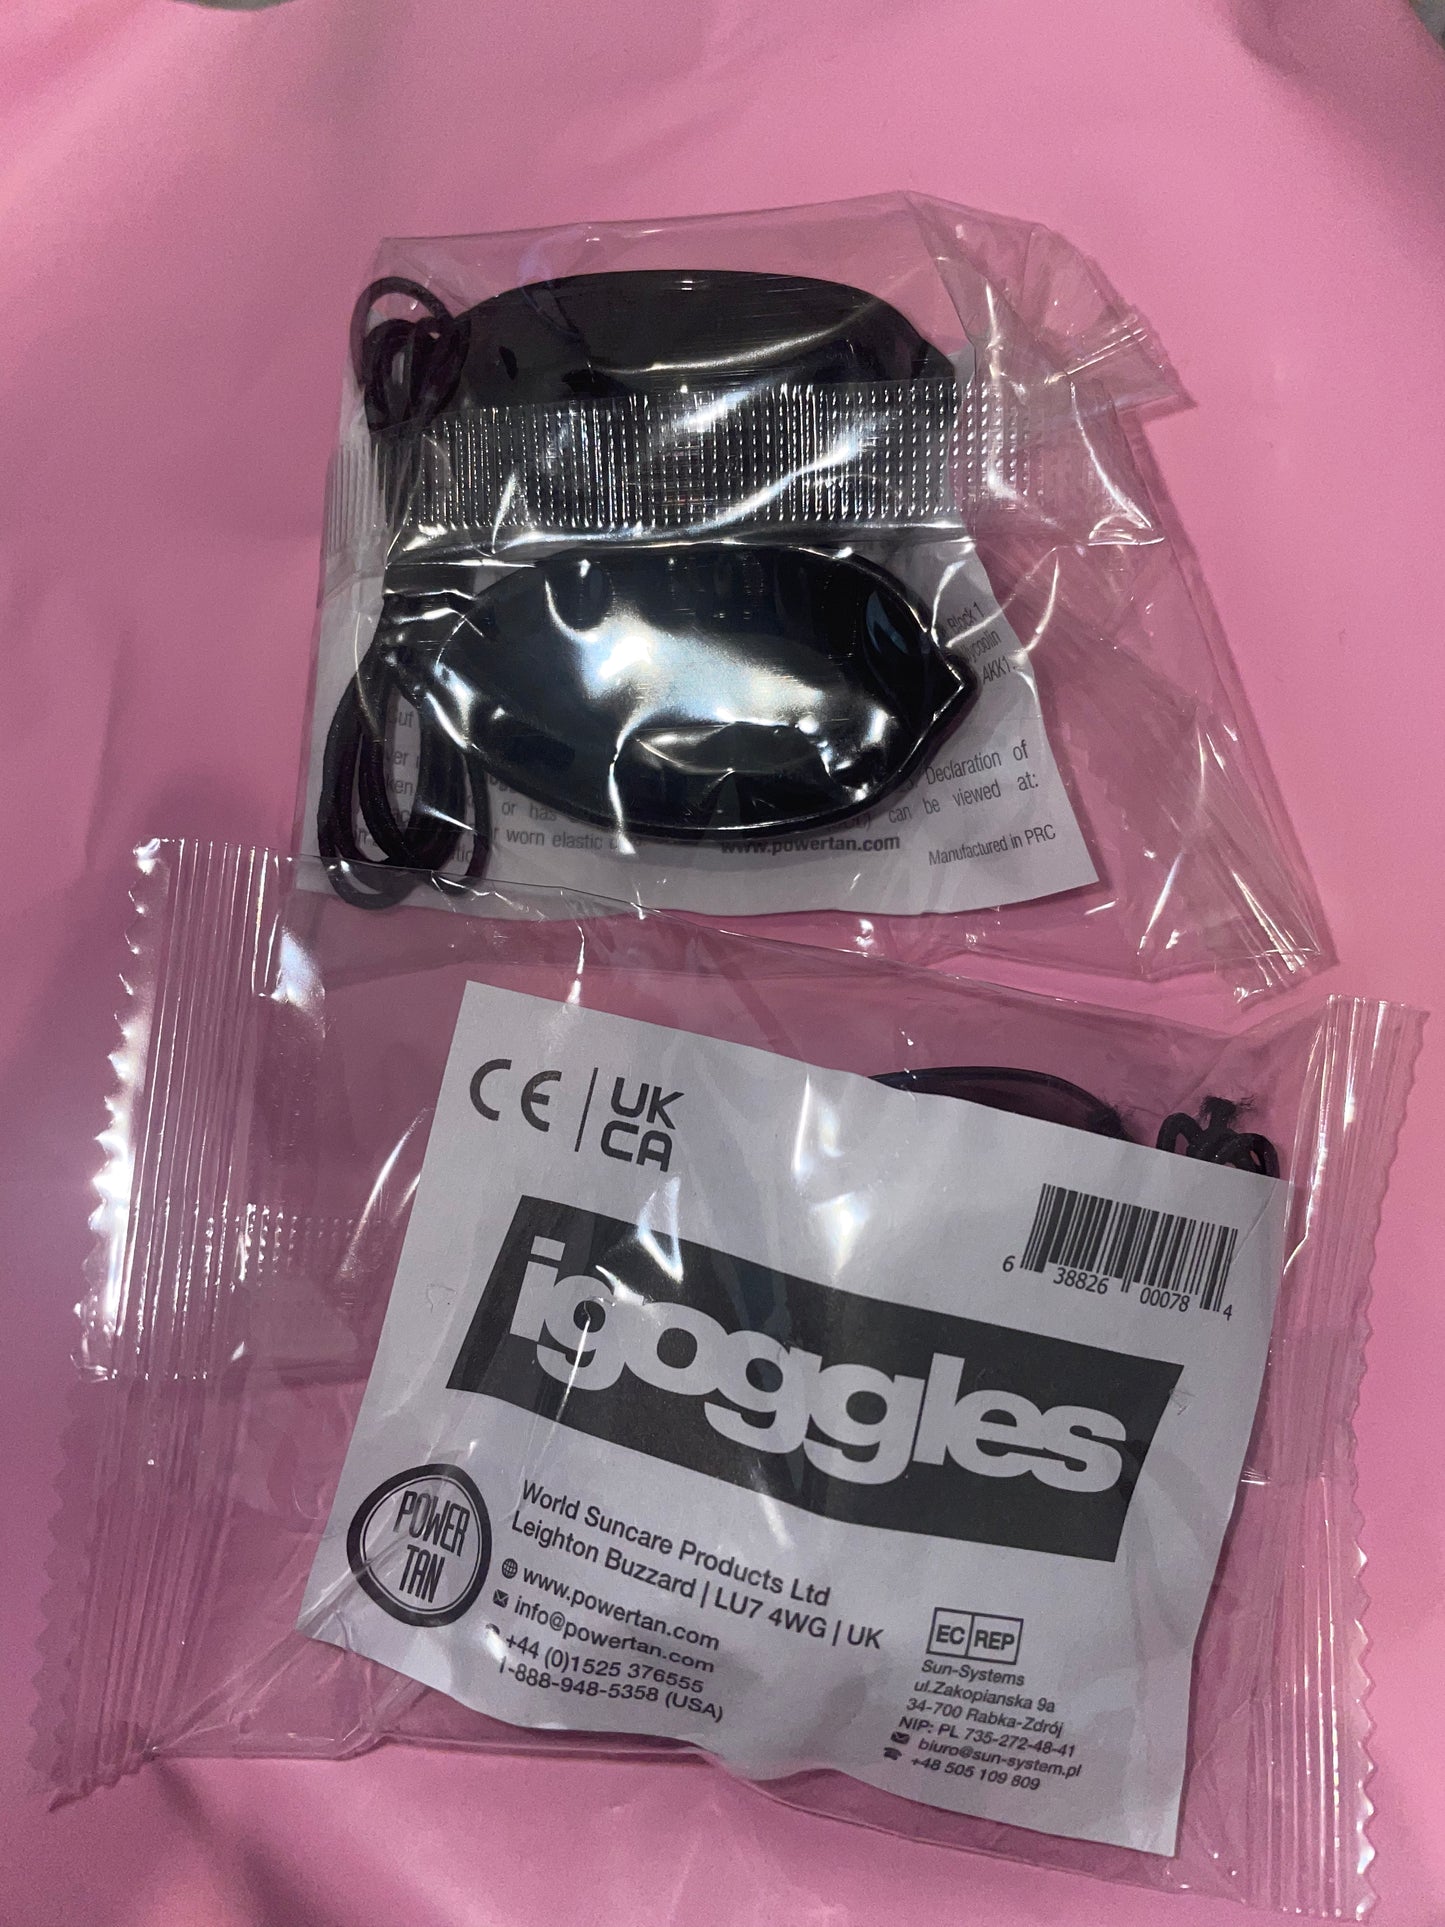 Igoggles (UV protection)